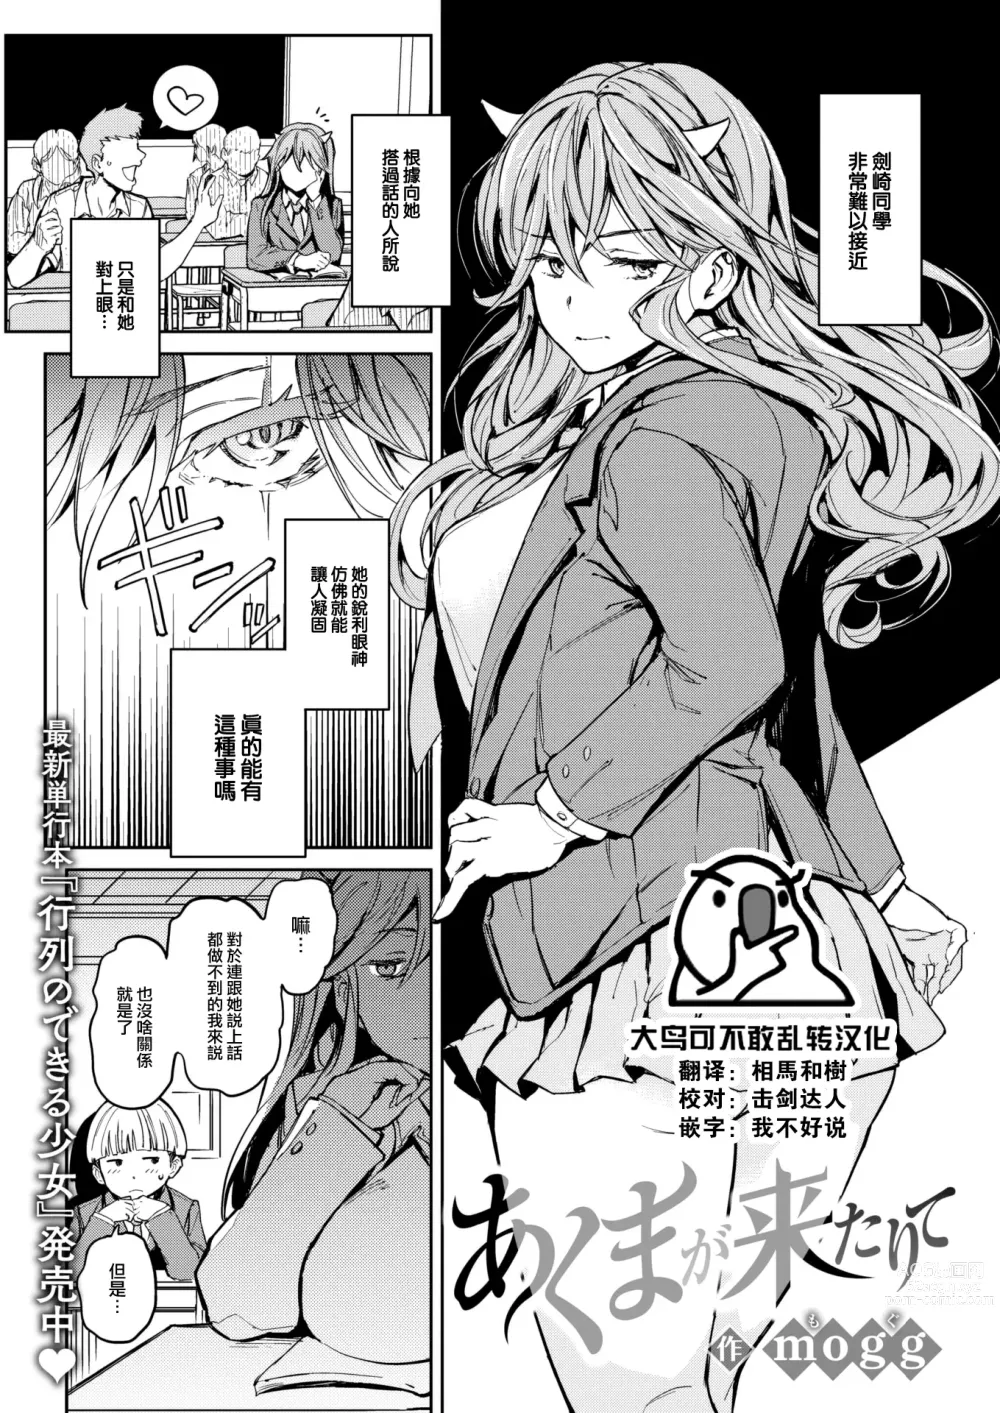 Page 1 of manga Akuma ga Kitarite